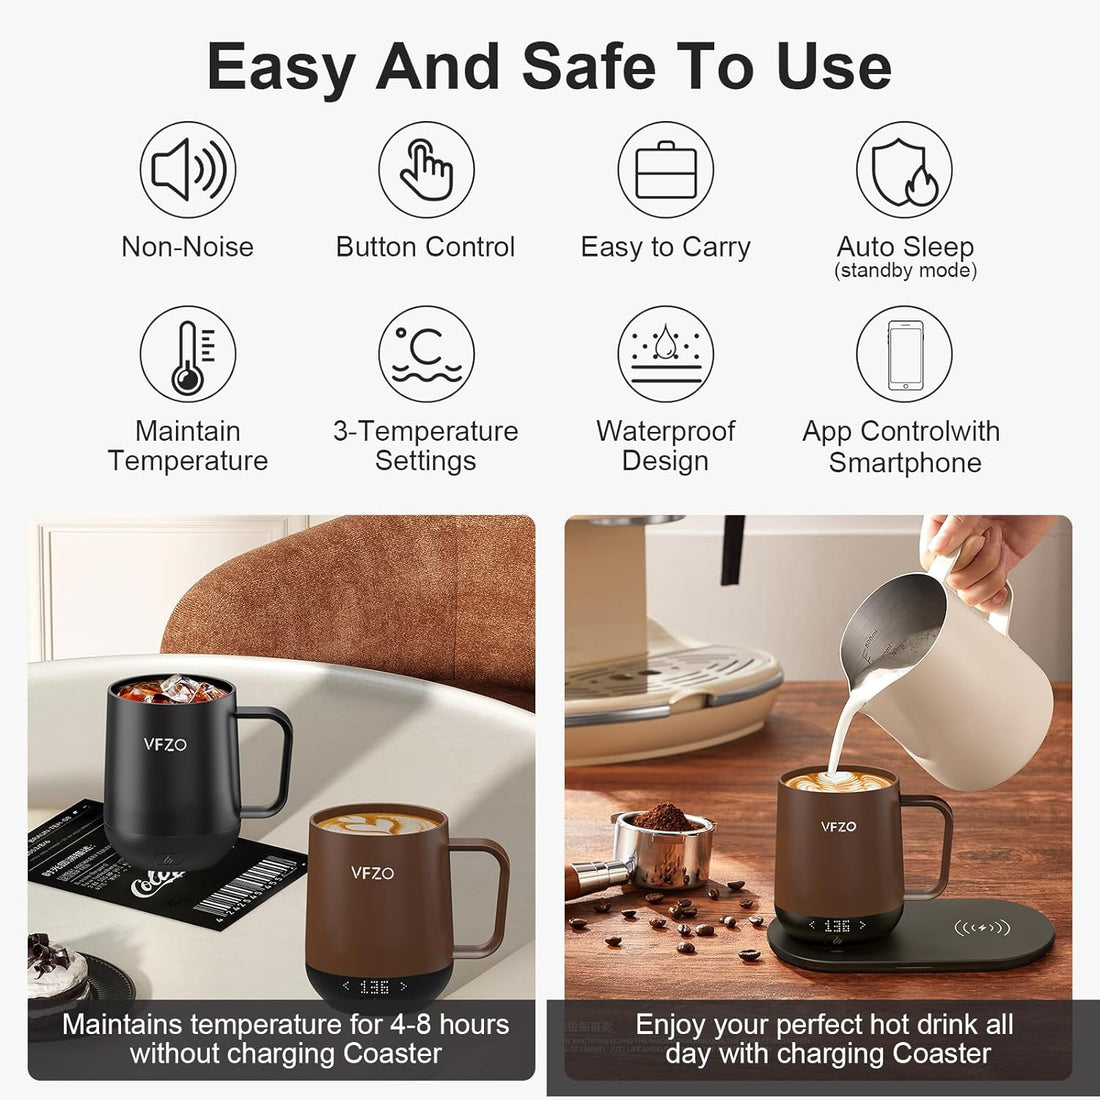 VFZO Temperature Control Smart Mug, Self Heating Coffee Mug LED Display, 180 Min Battery Life - Hot up to 149℉ Fast Wireless Charger Base Improved Design (12oz, Coffee)